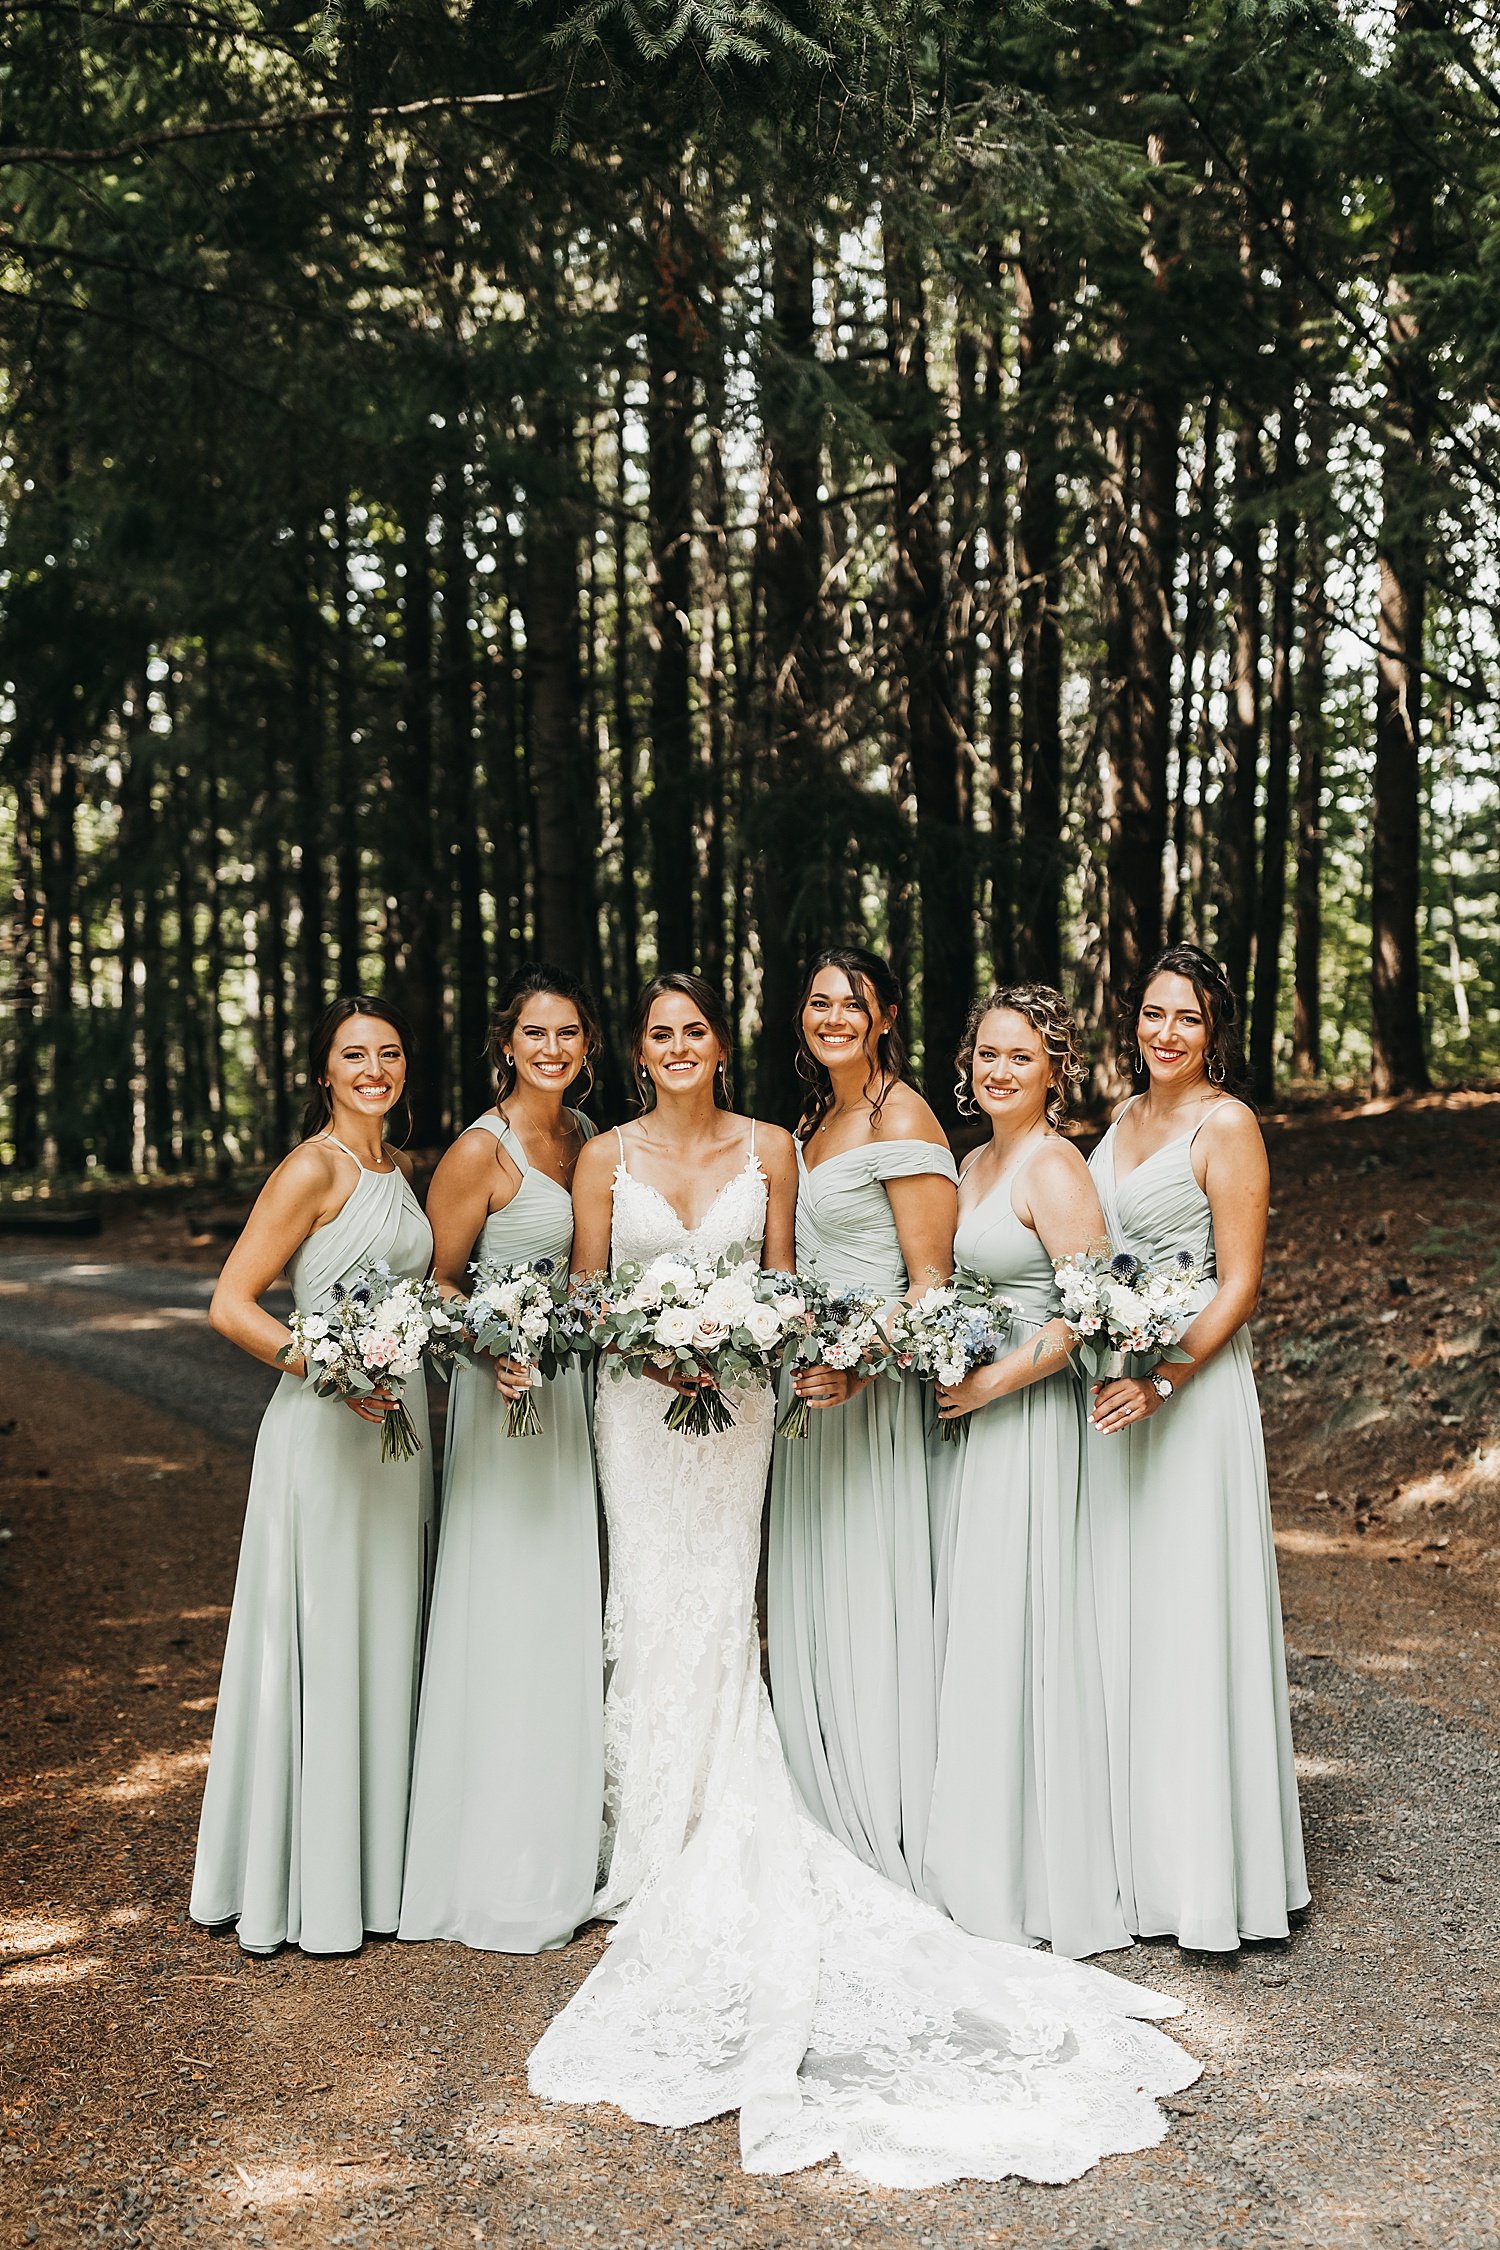 Simple bridesmaids dresses